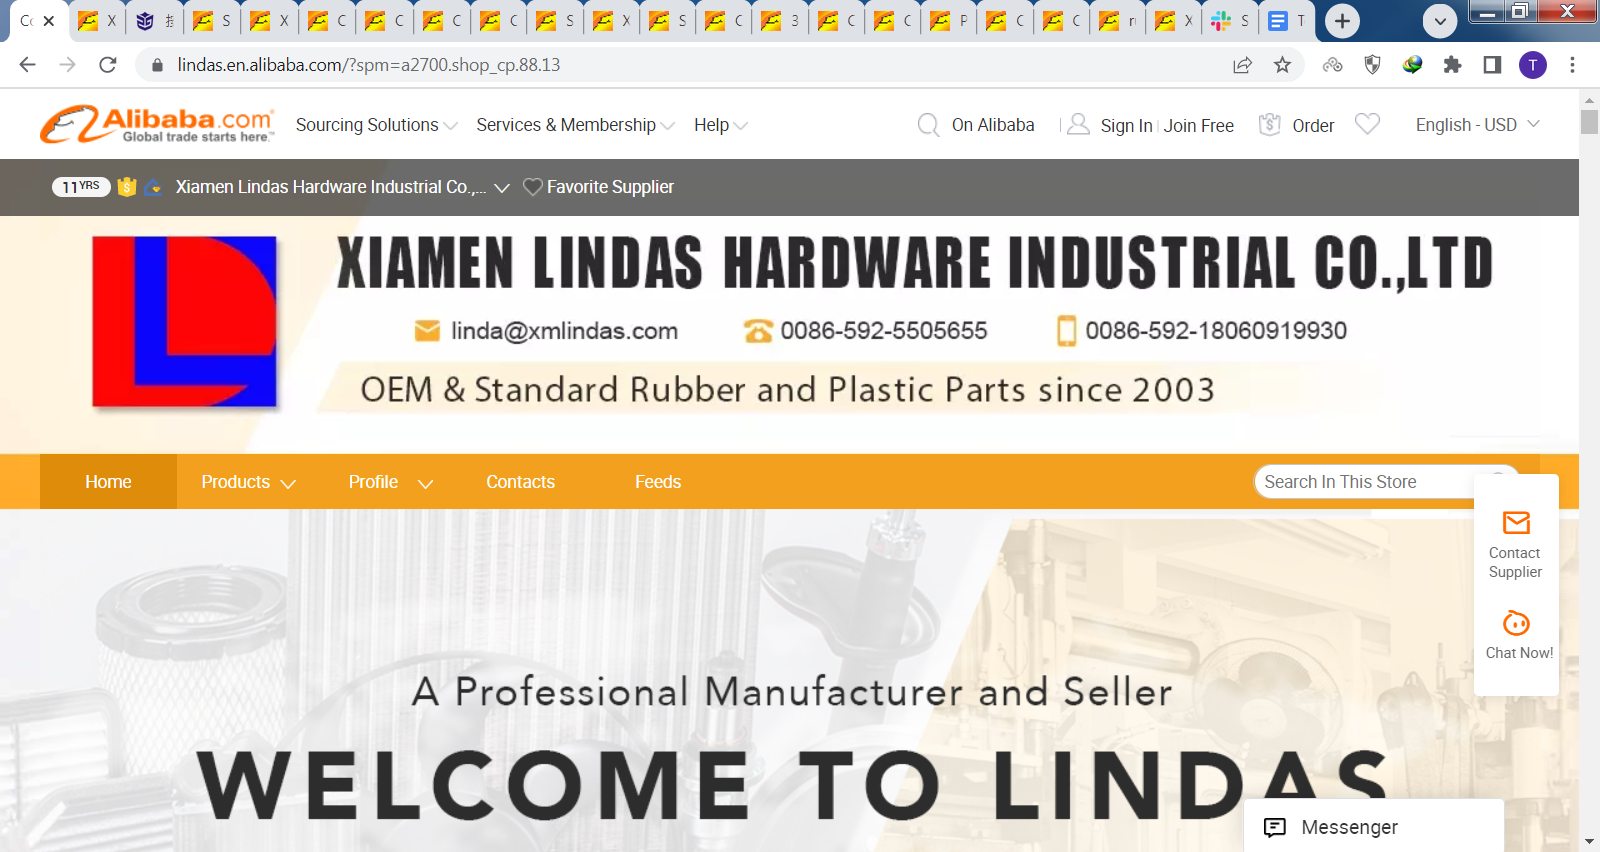 Lindas Hardware Industrial Co., Ltd